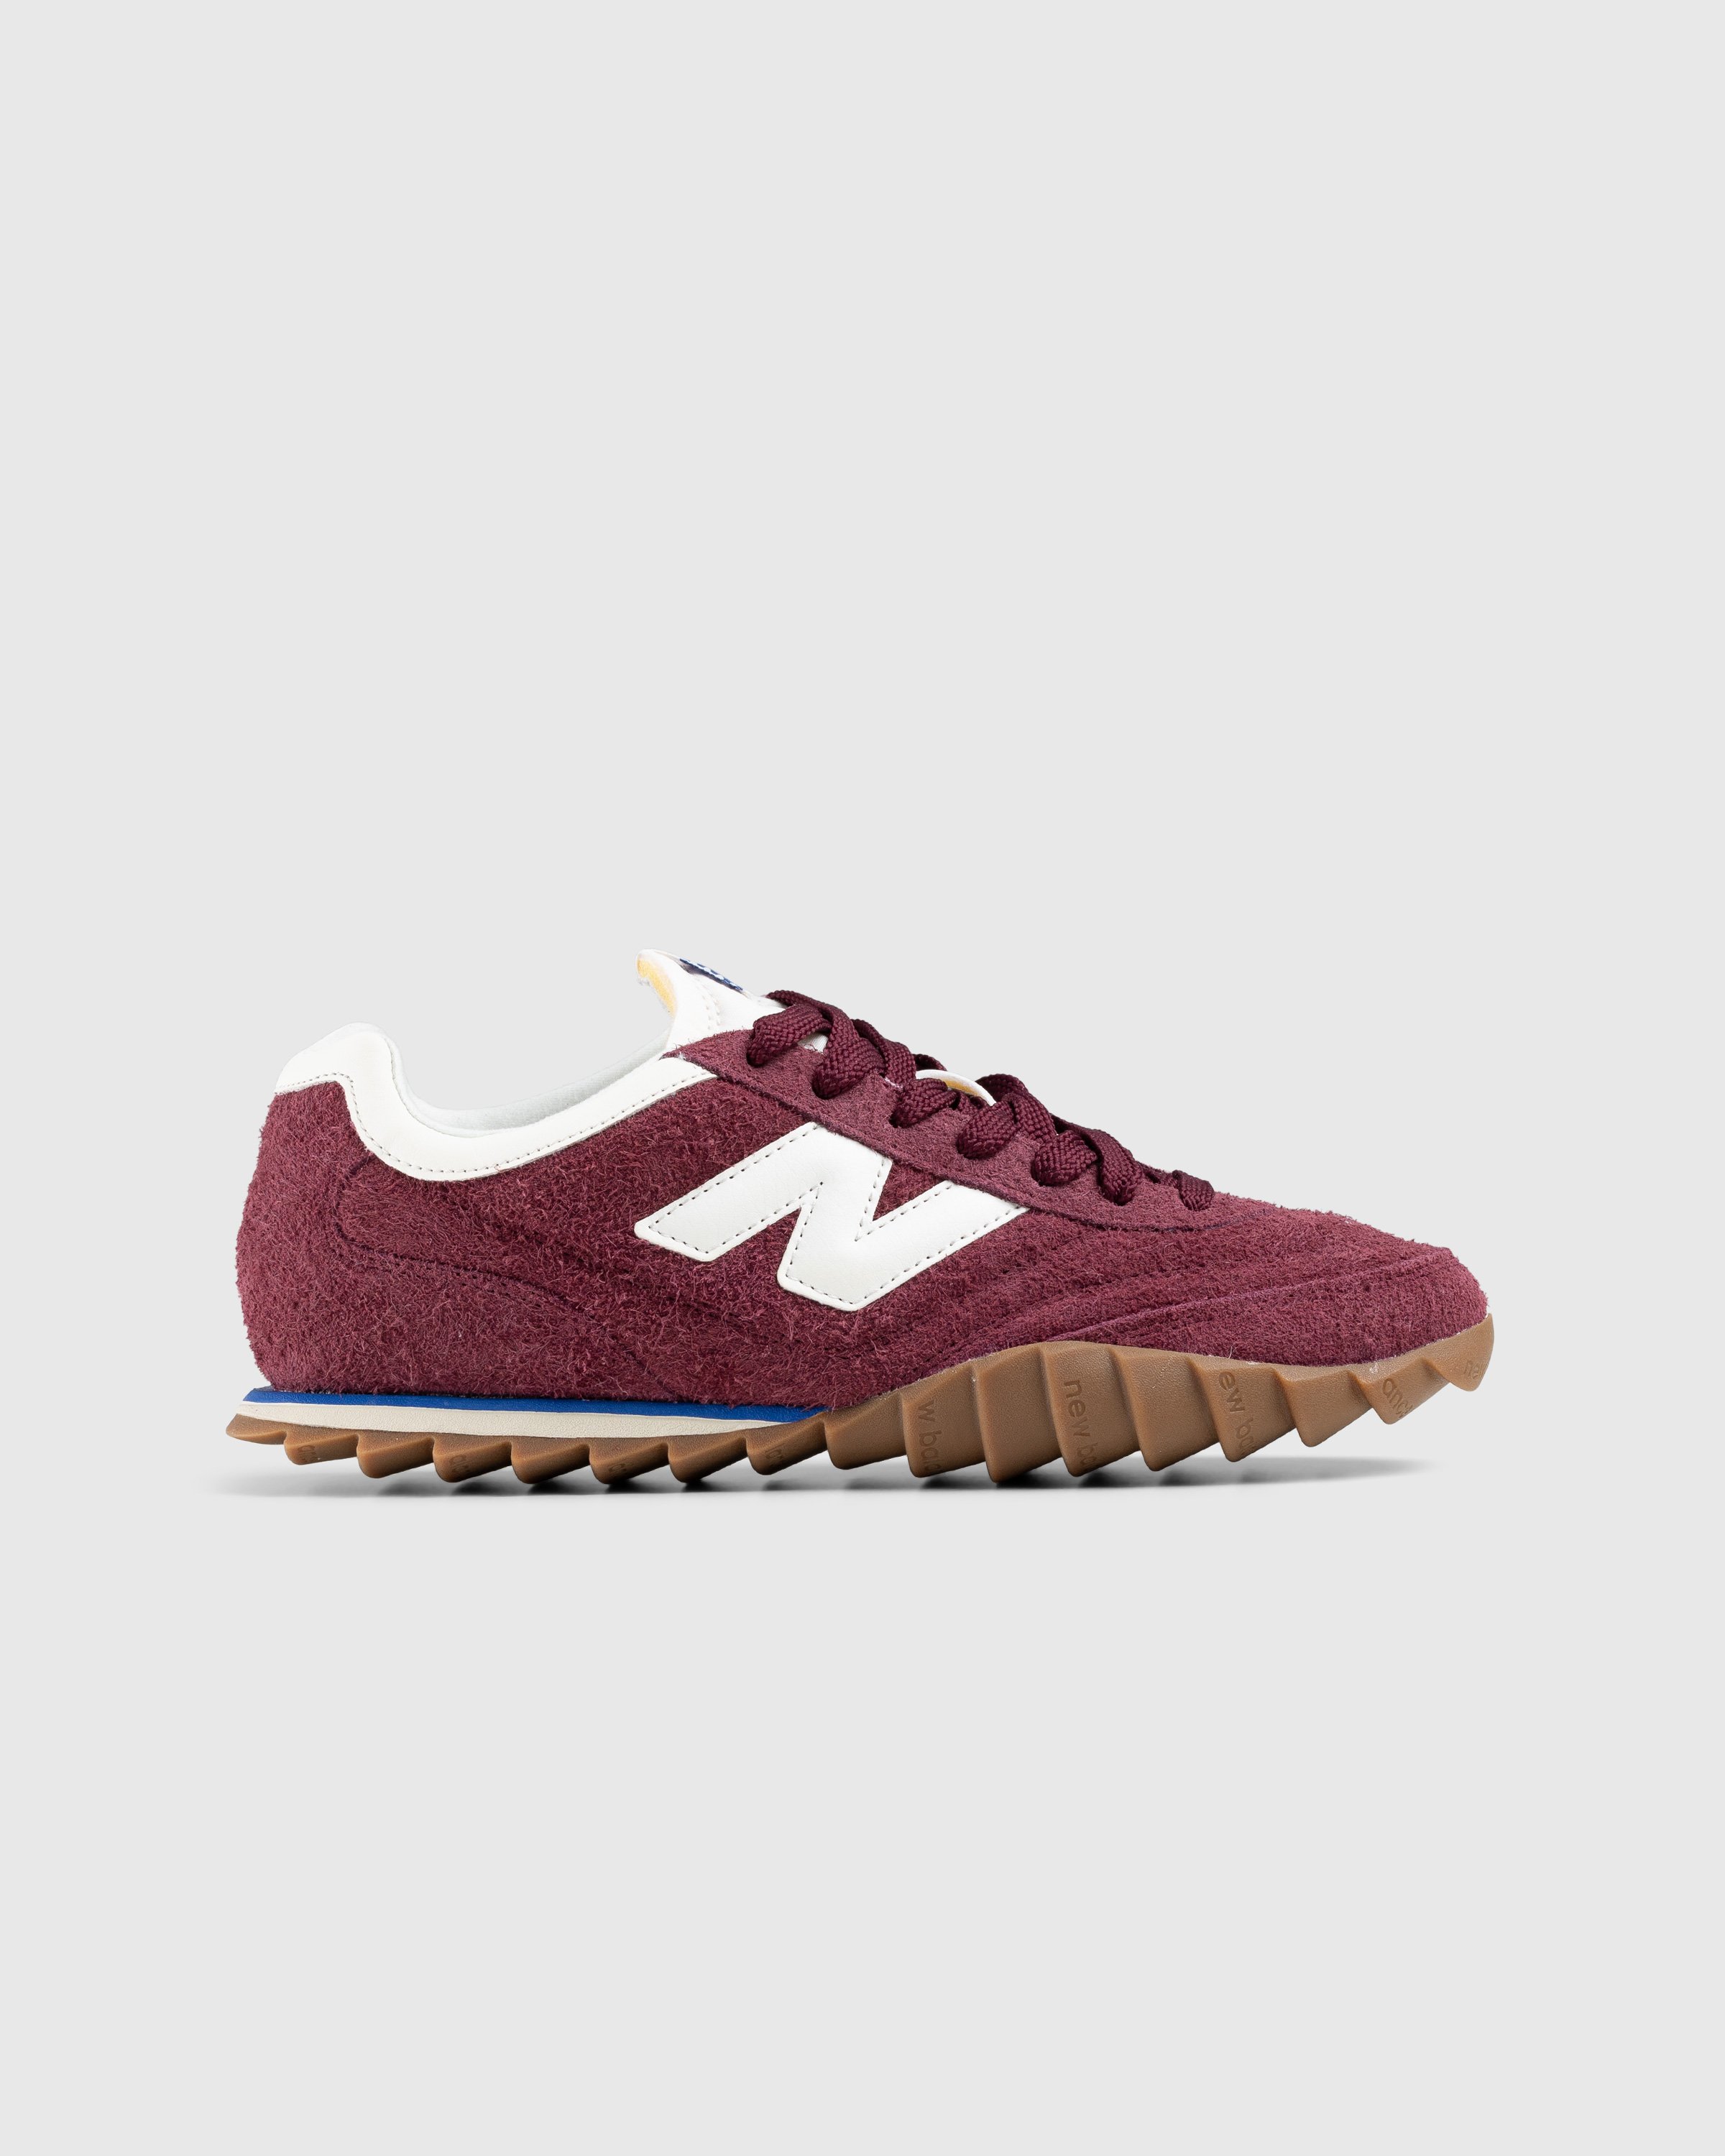 New Balance - URC30RD NB Burgundy - Footwear - Red - Image 1